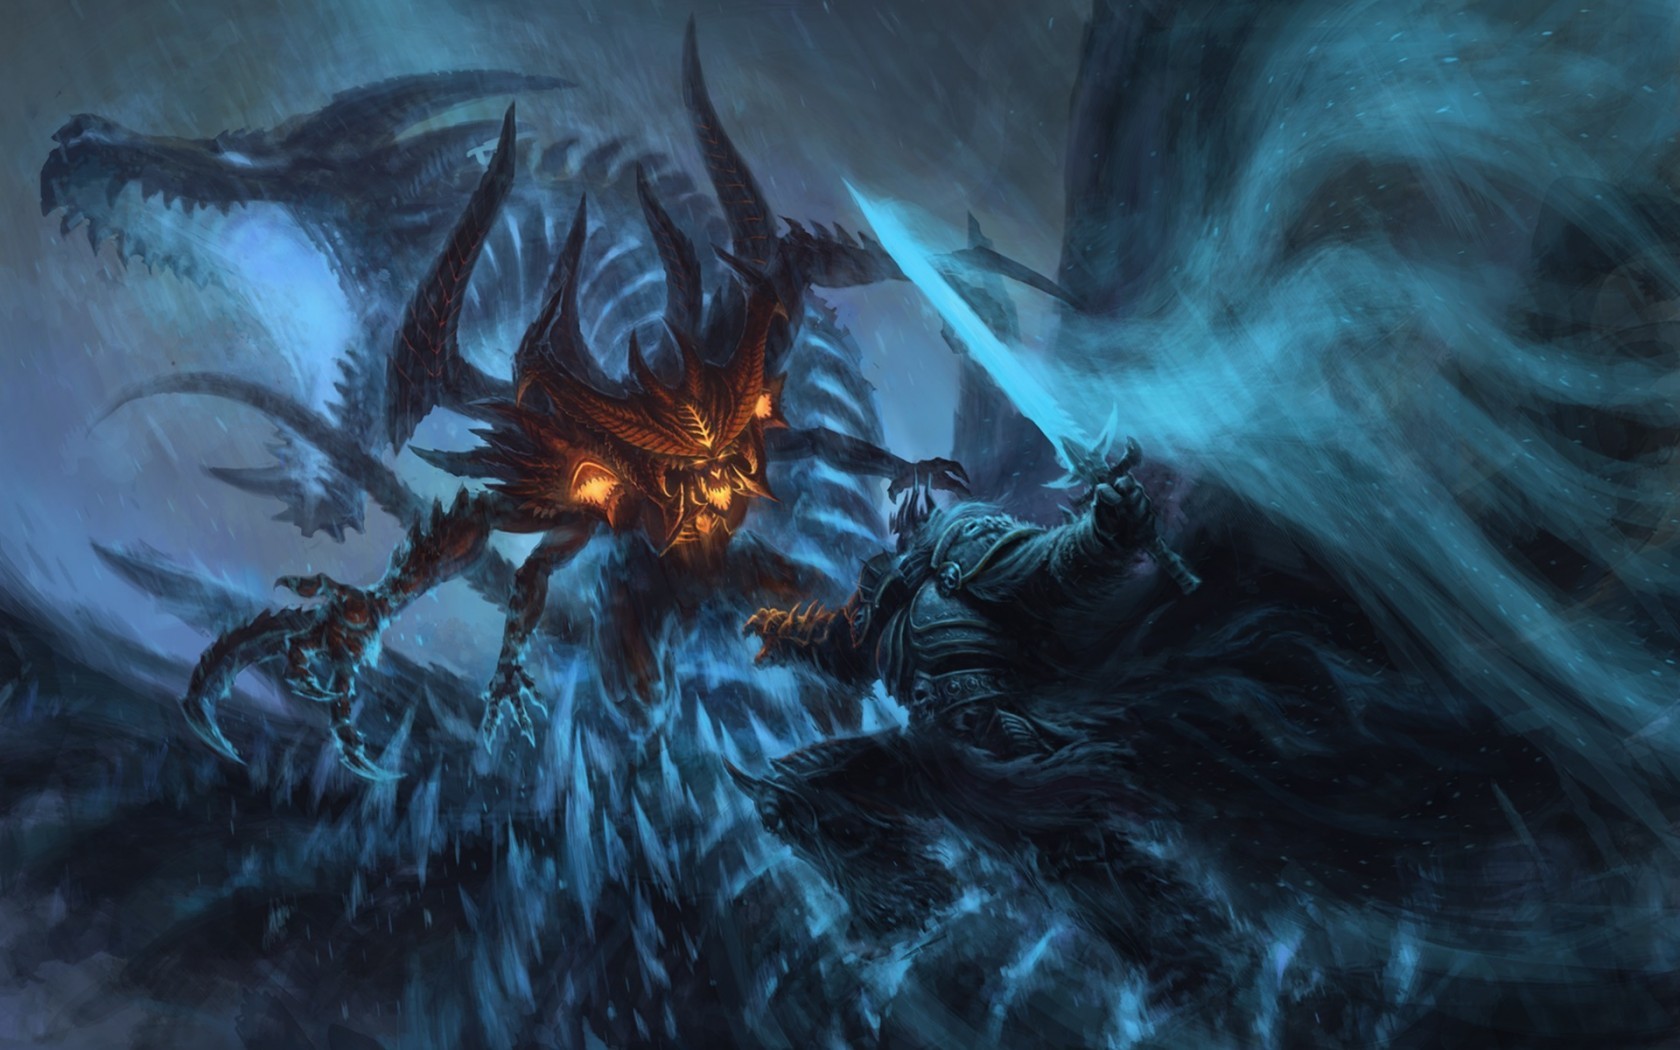 General 1680x1050 Diablo III video games fantasy art digital art Lich King Arthas Menethil World of Warcraft PC gaming video game art